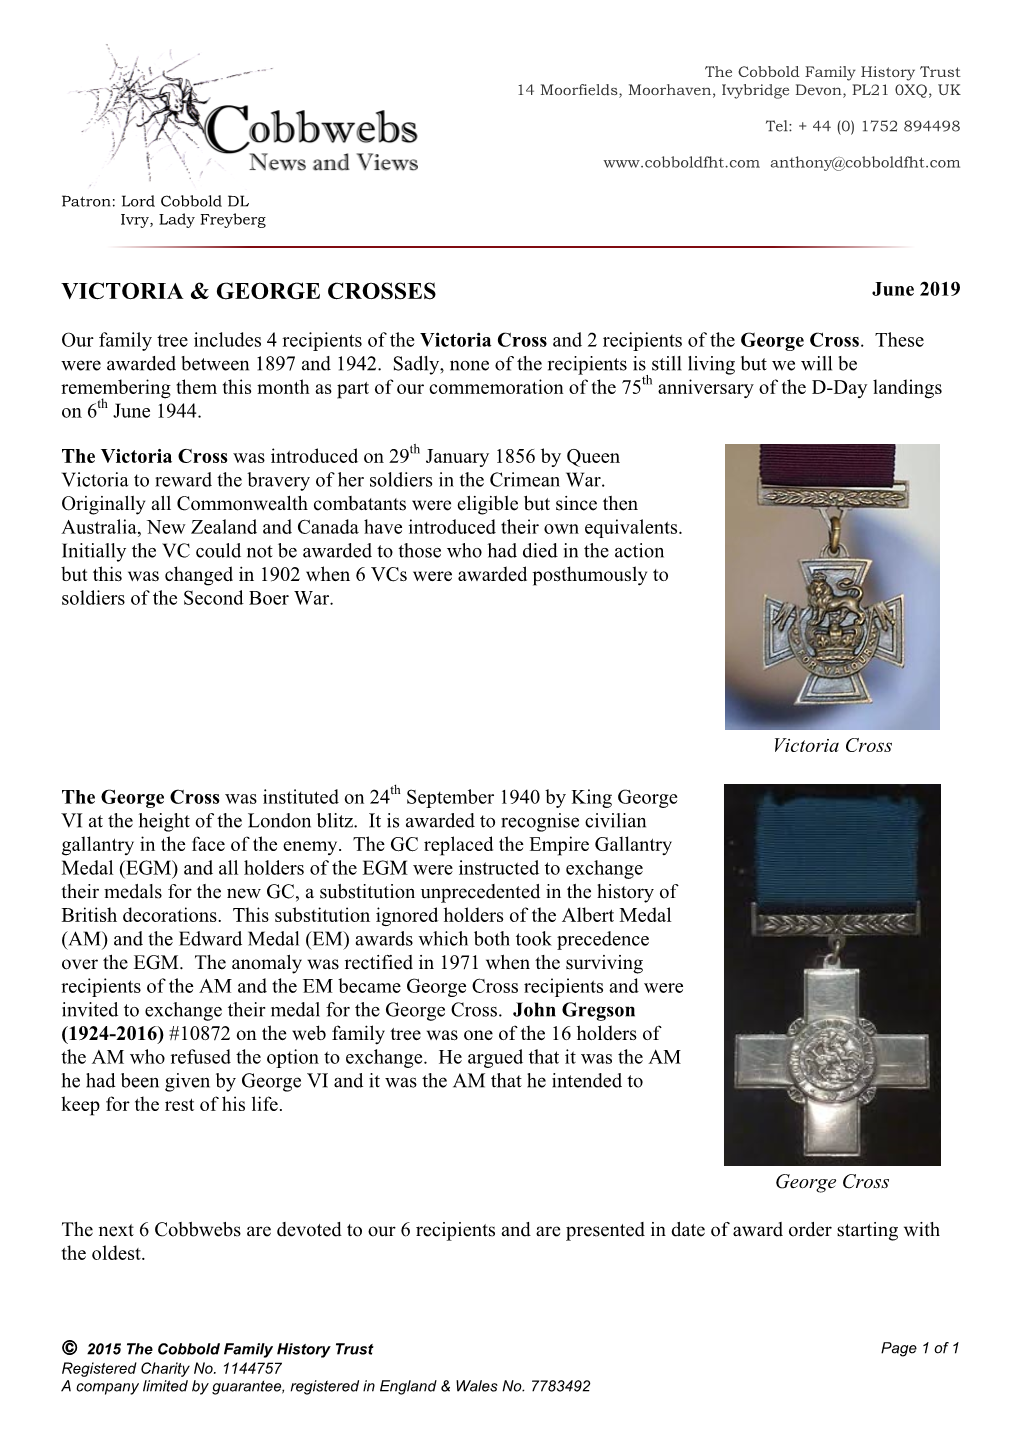 Victoria & George Crosses